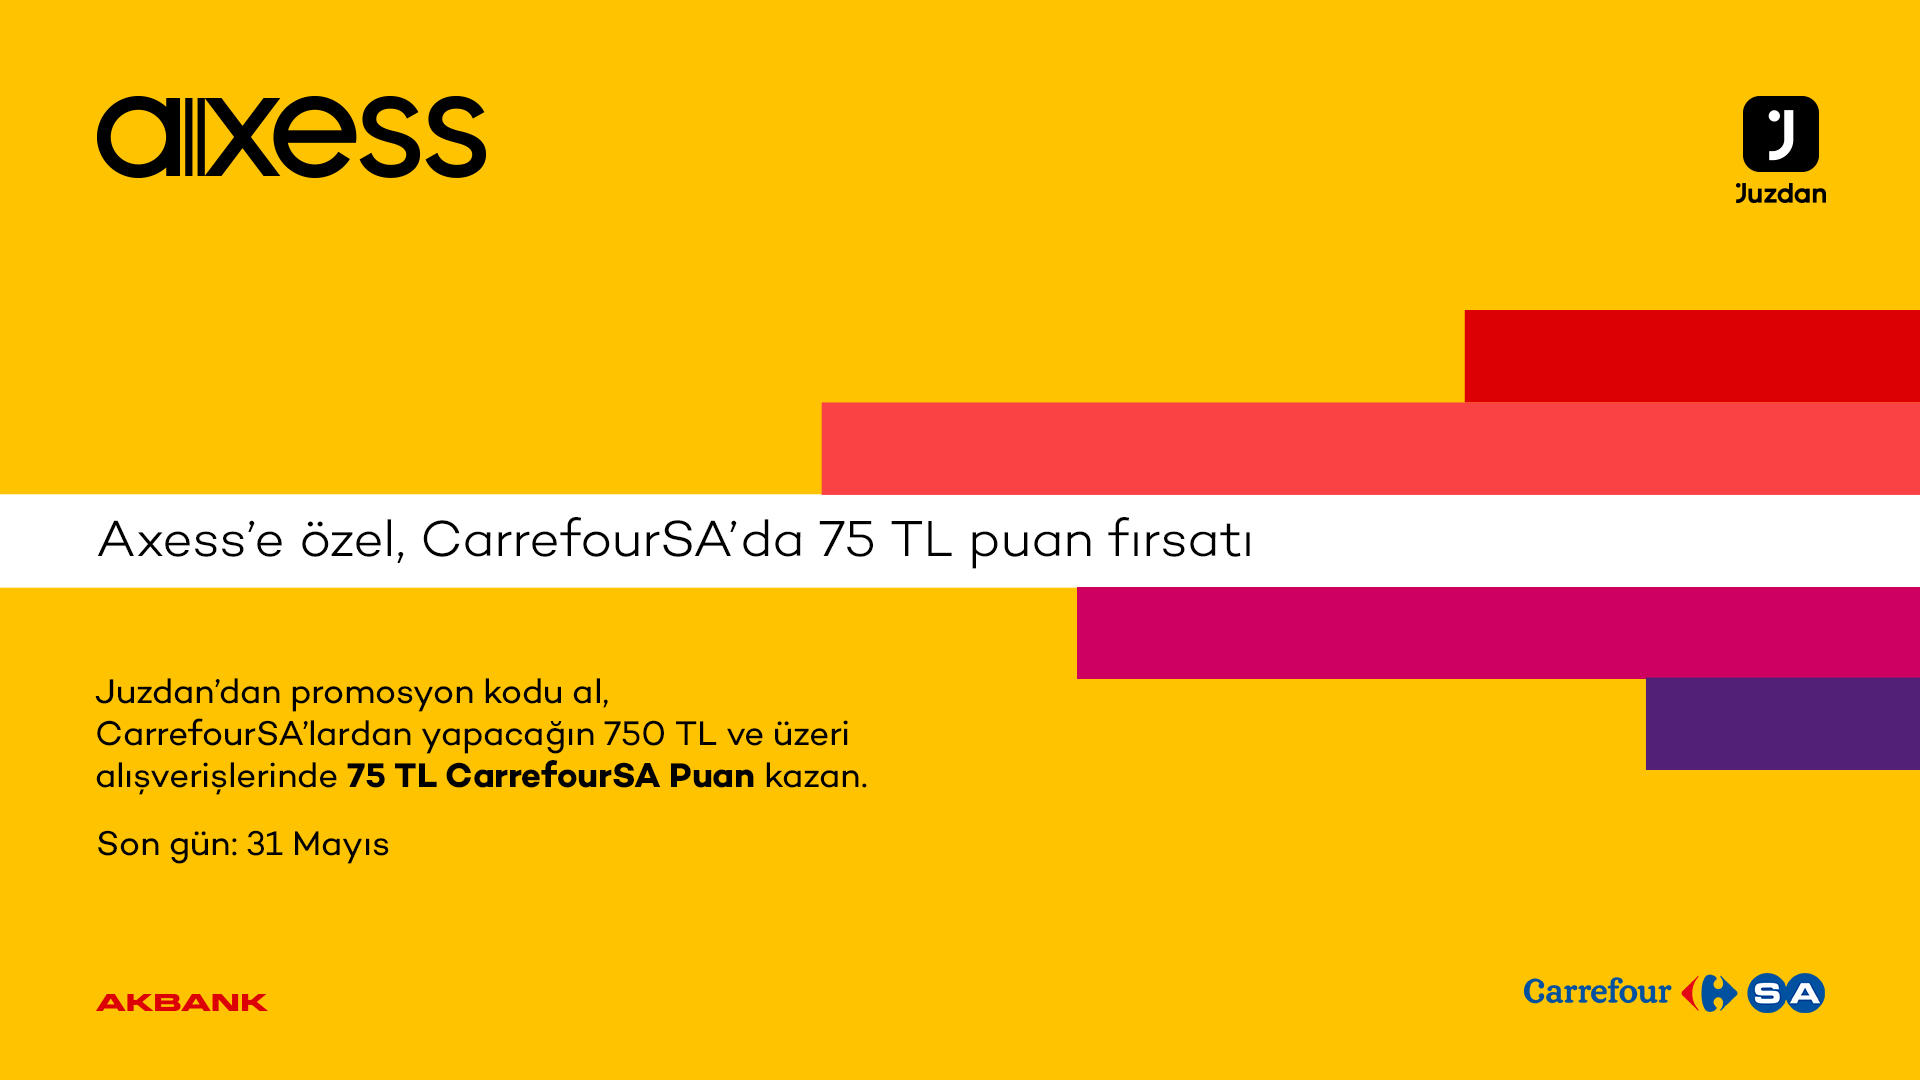 Axess’e özel CarrefourSA’larda 750 TL ve üzeri alışverişlerinize 75 TL CarrefourSA Puan! 